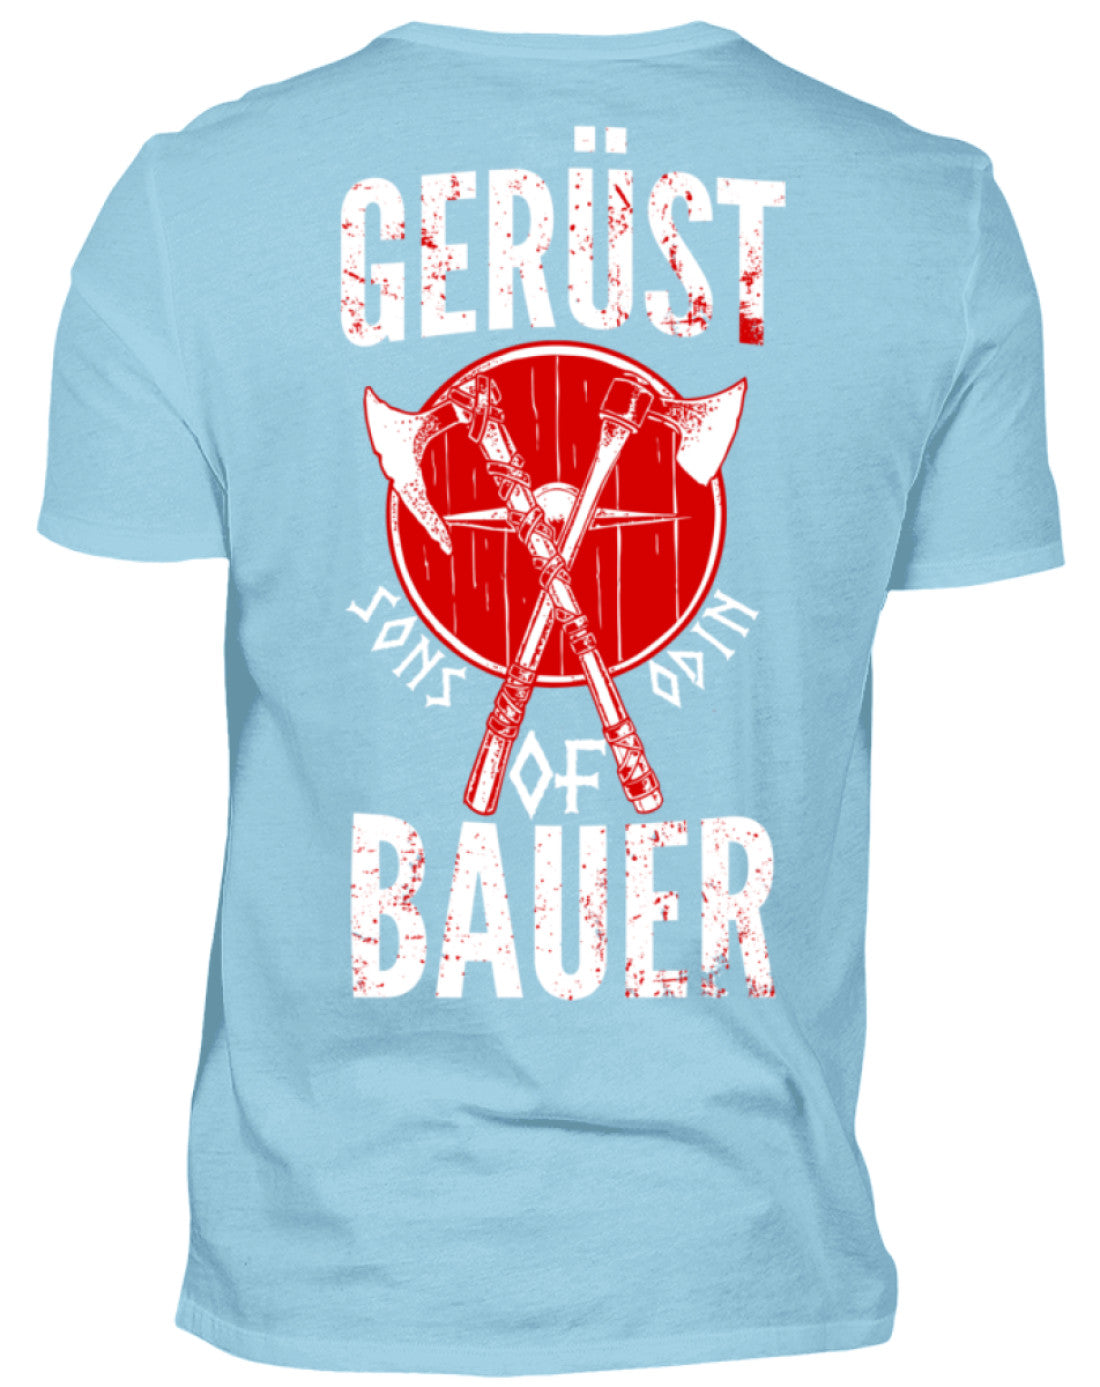 Gerüstbauer T-Shirt / Sons of Odin €24.95 Gerüstbauer - Shop >>